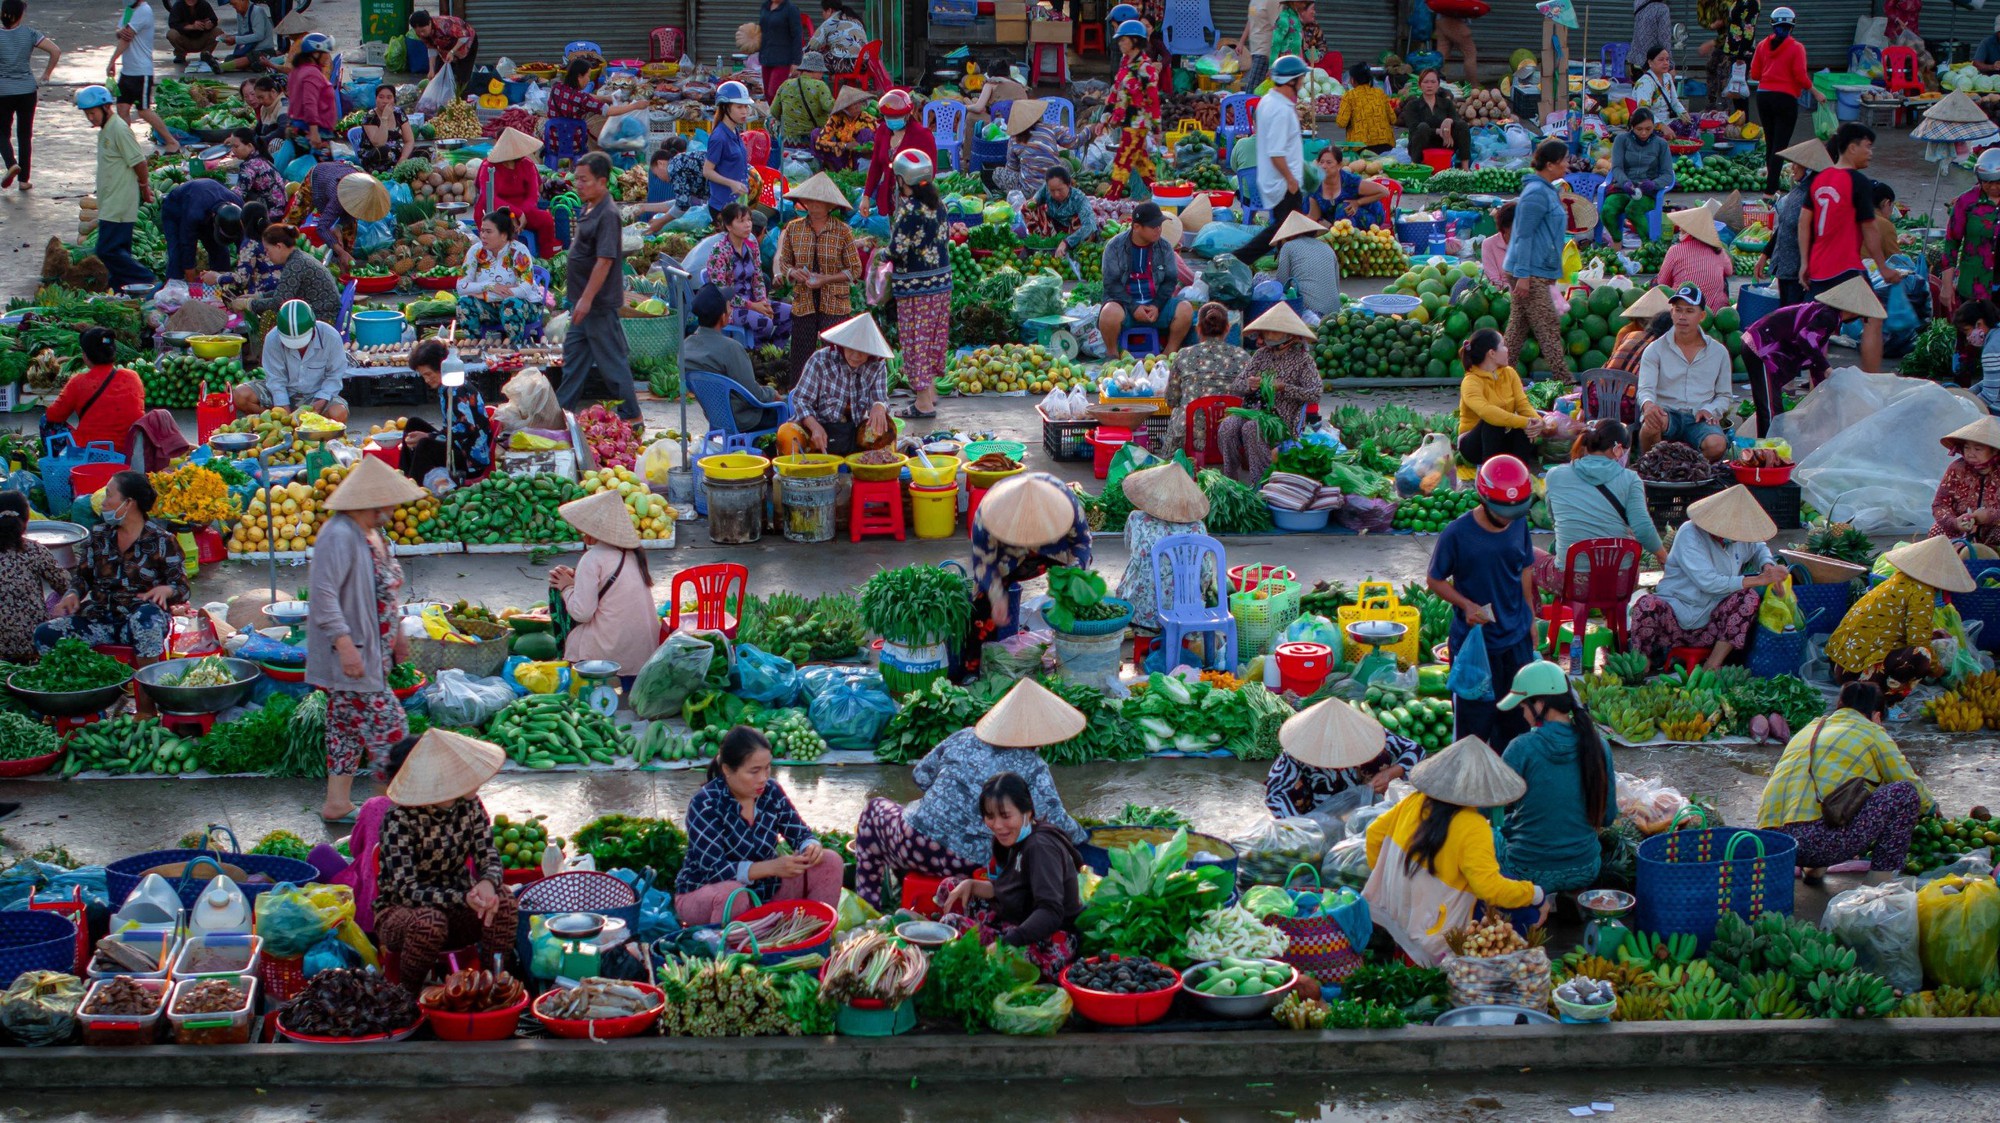 Unique scene of the 'unique' market in the West - Photo 8.